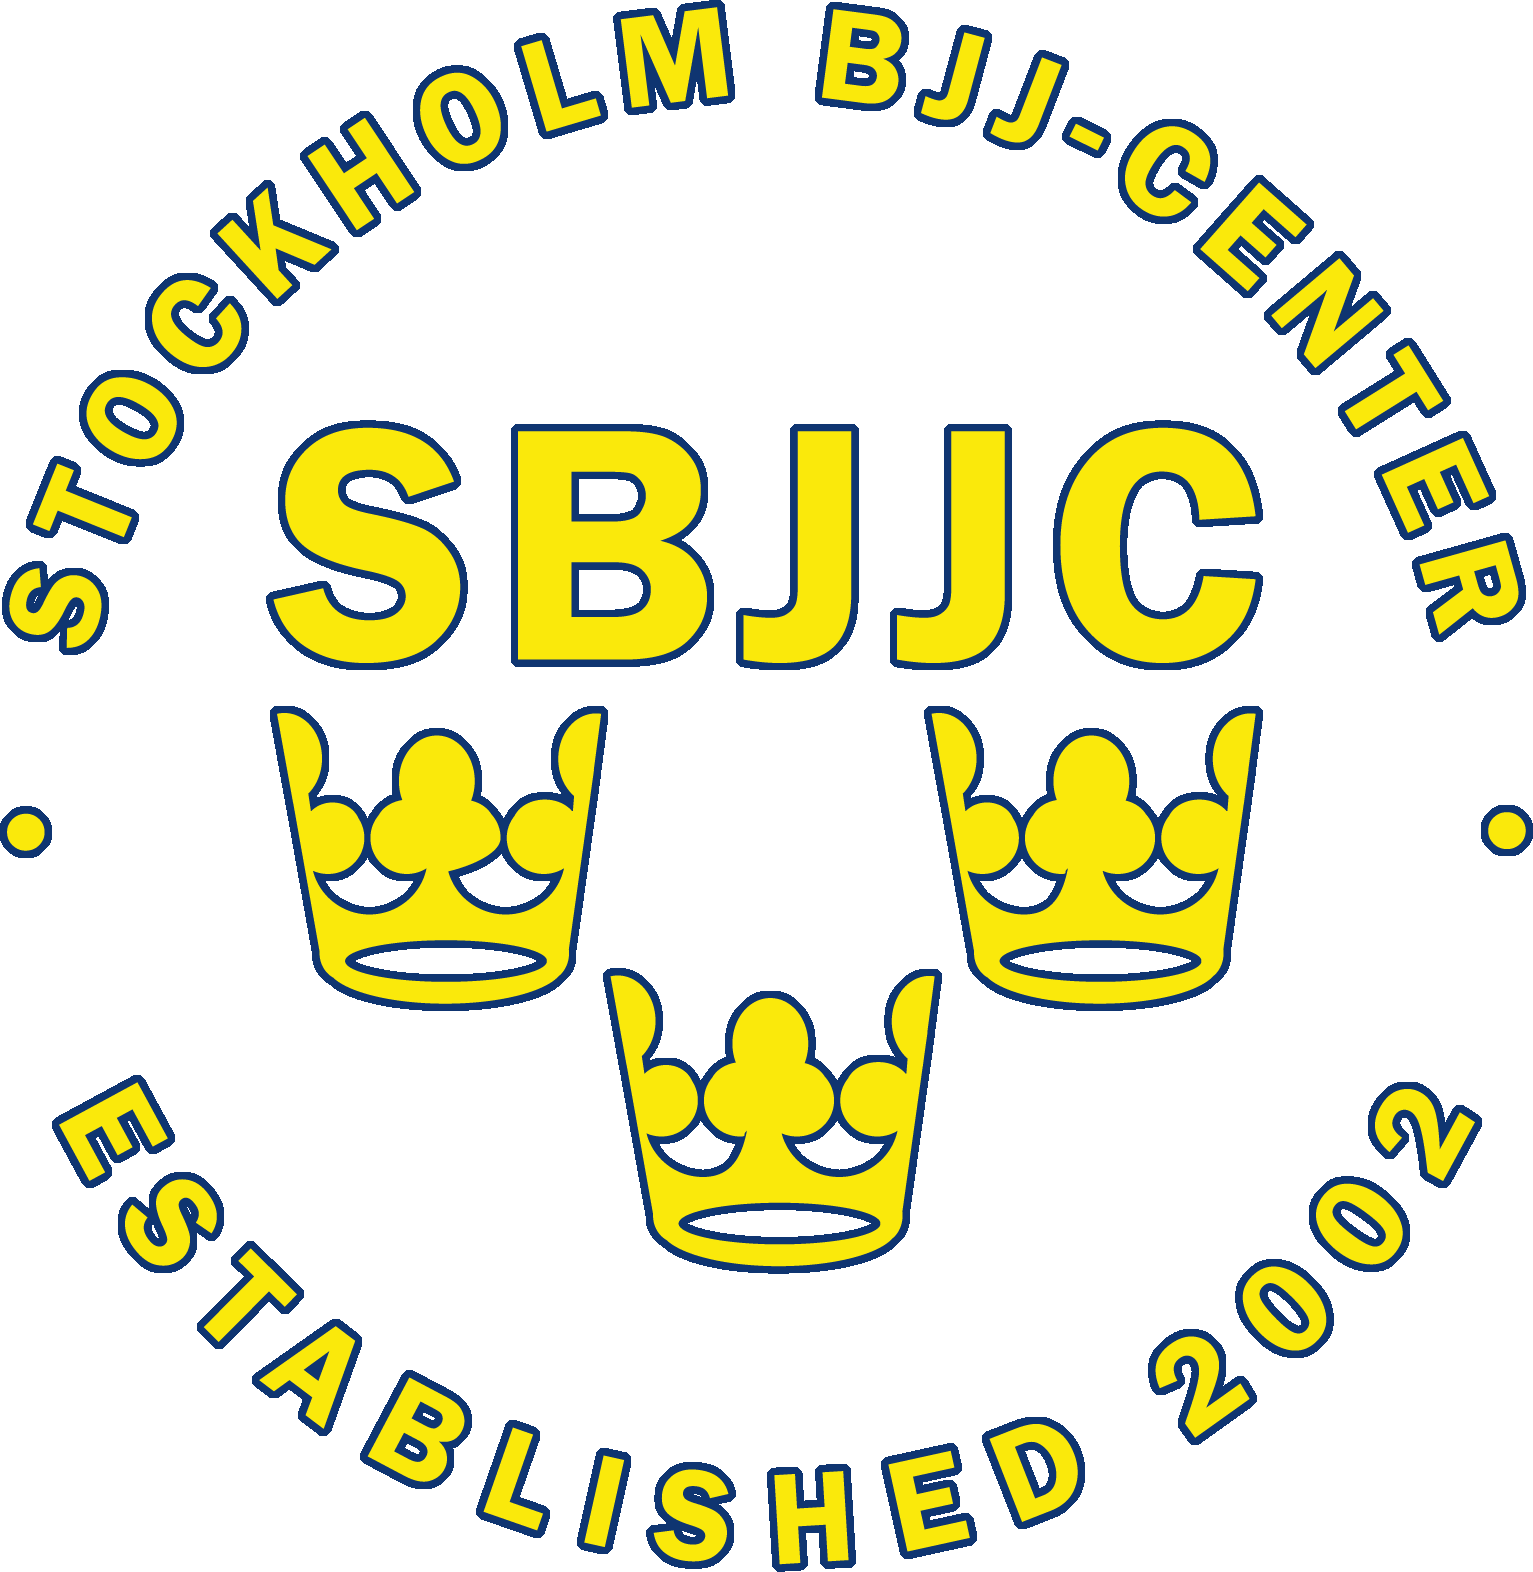 Stockholm BJJ-Center